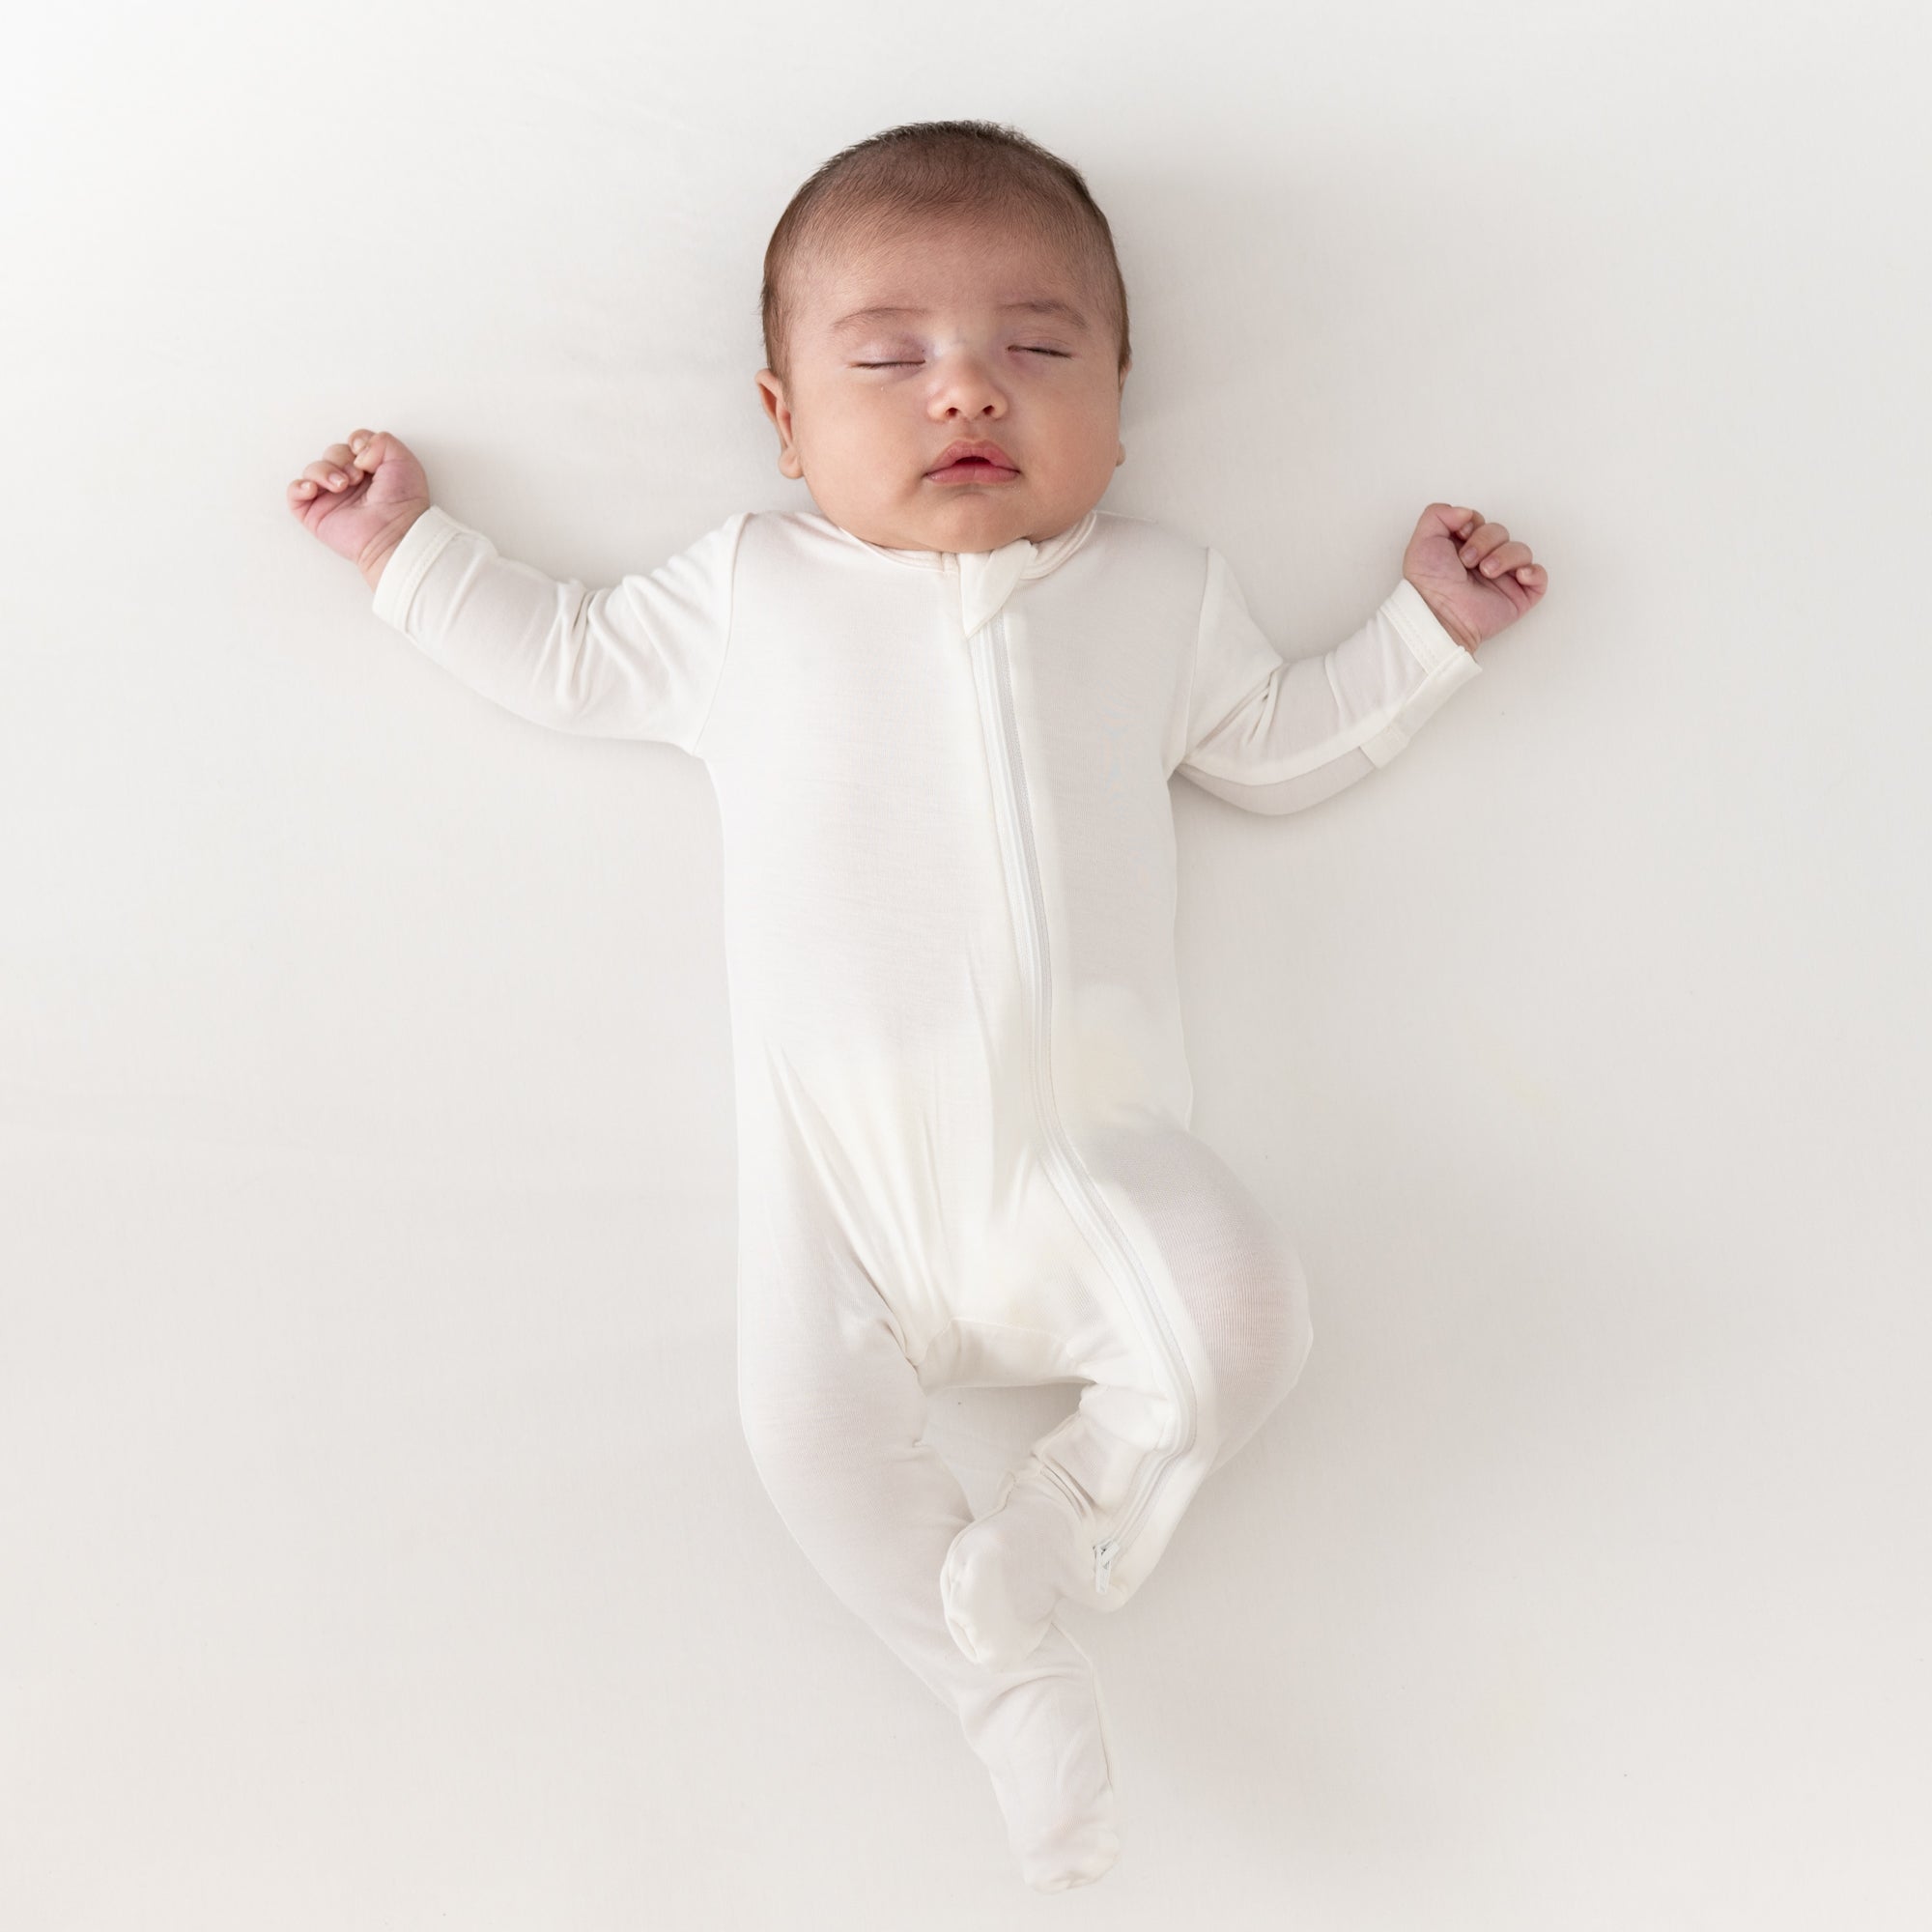 Newborn Sleep Tips: Getting Through the First Few Months